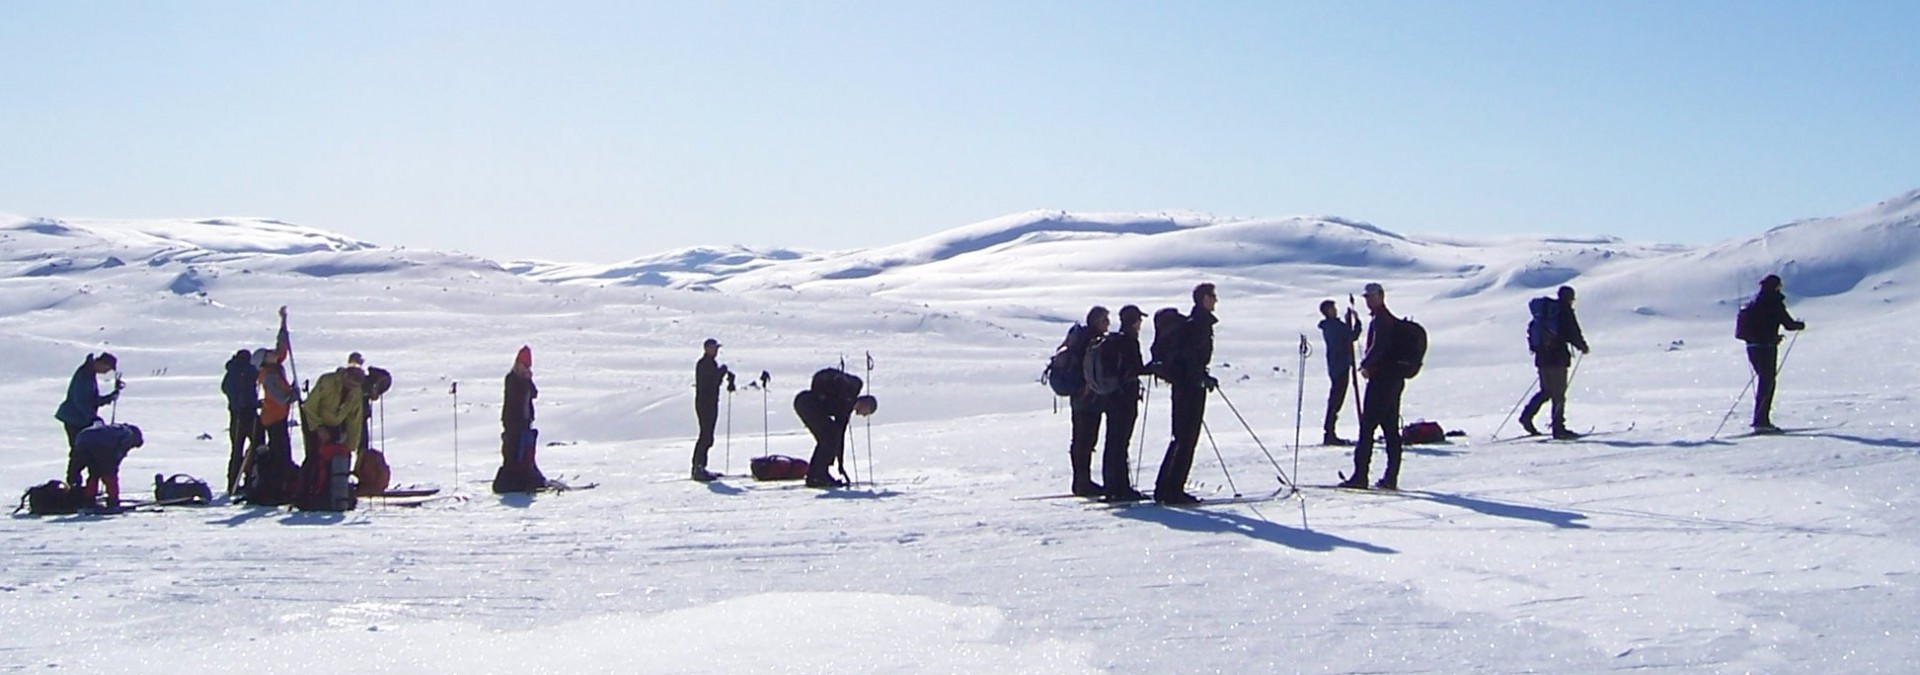 Hardangervidda plateau ski tour